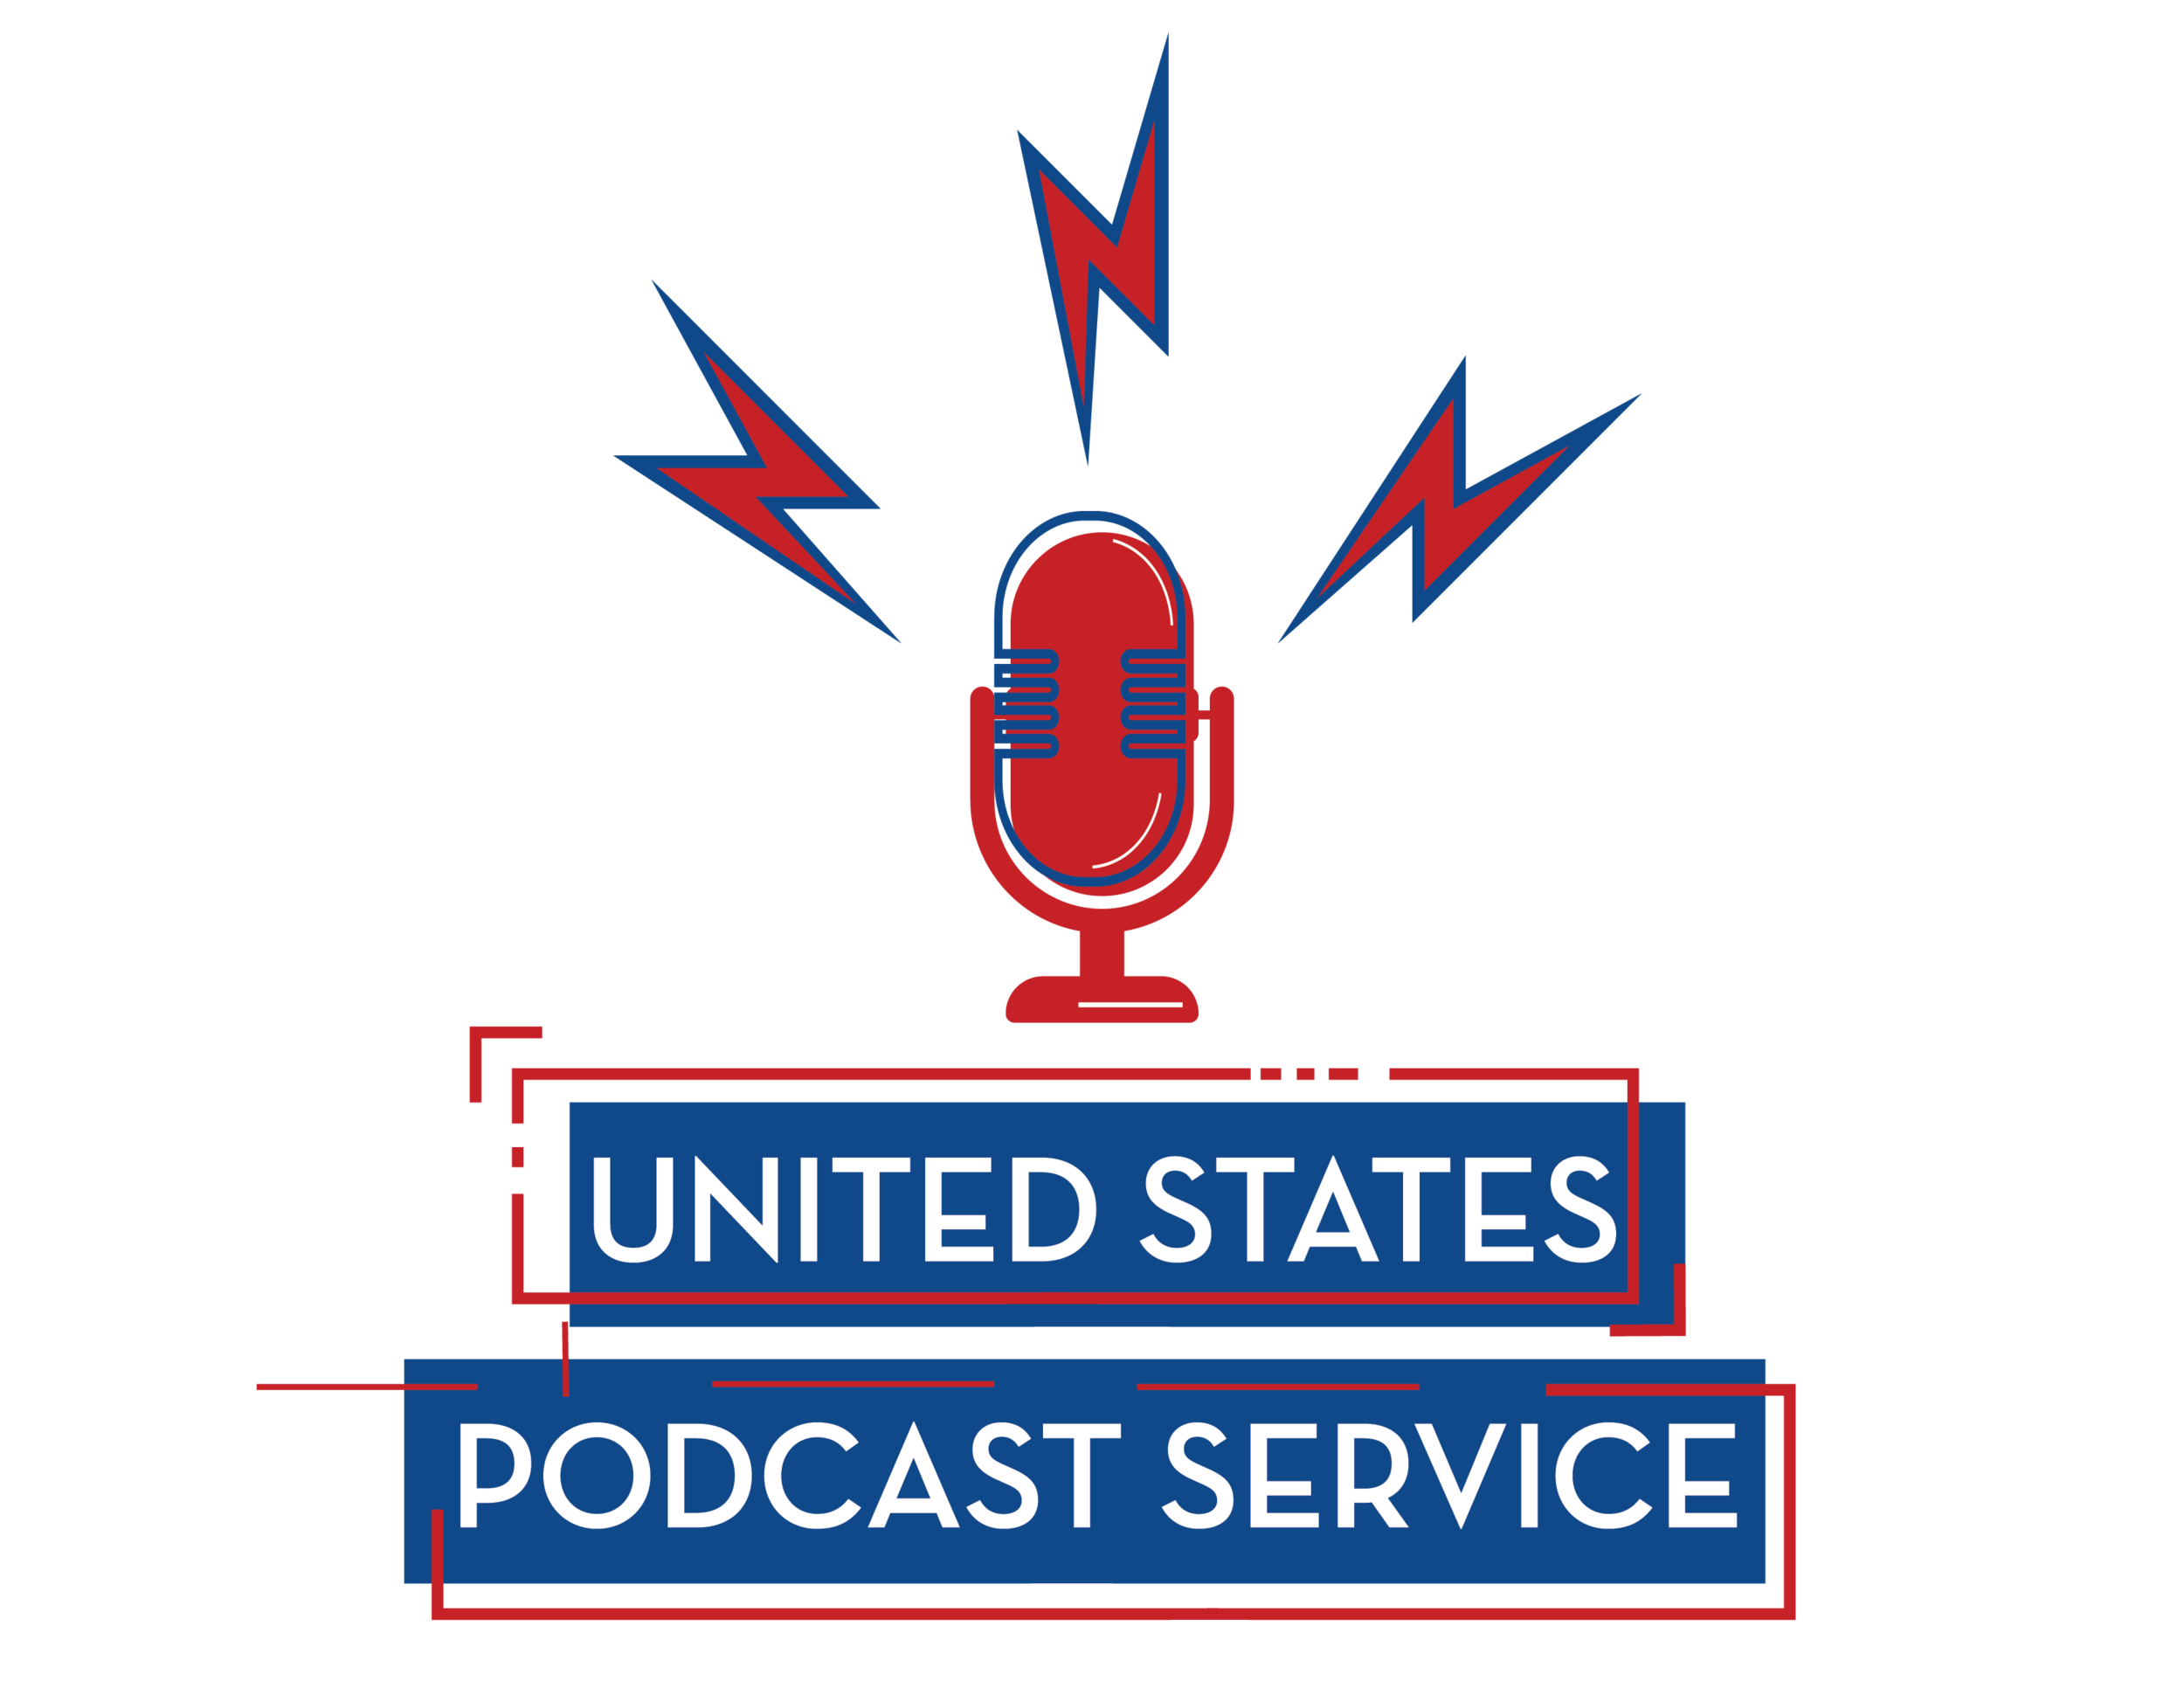 United States Podcast Service